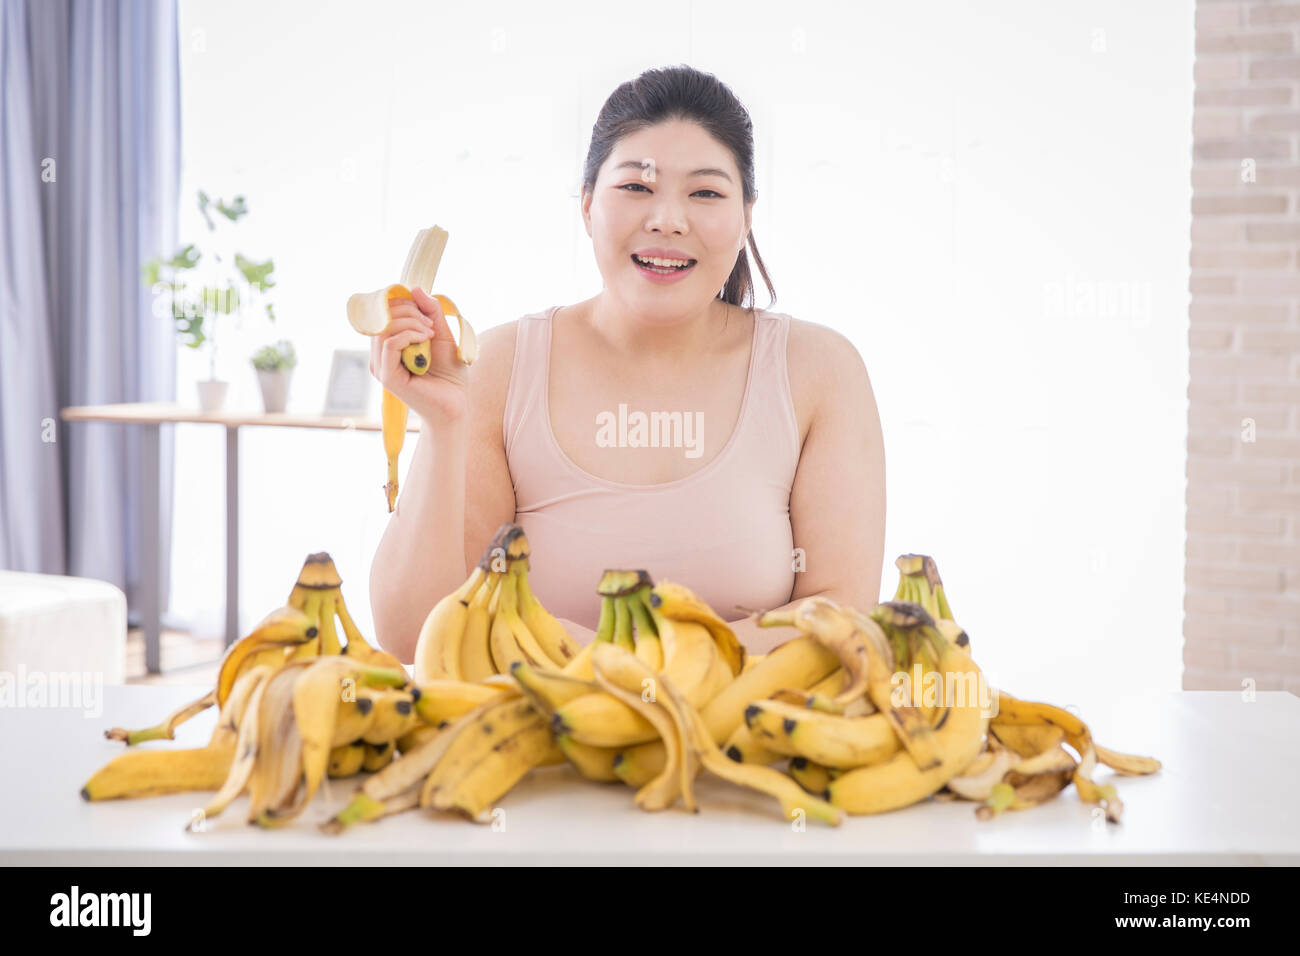 Portrait of young smiling grosse femme avec des bananes Banque D'Images